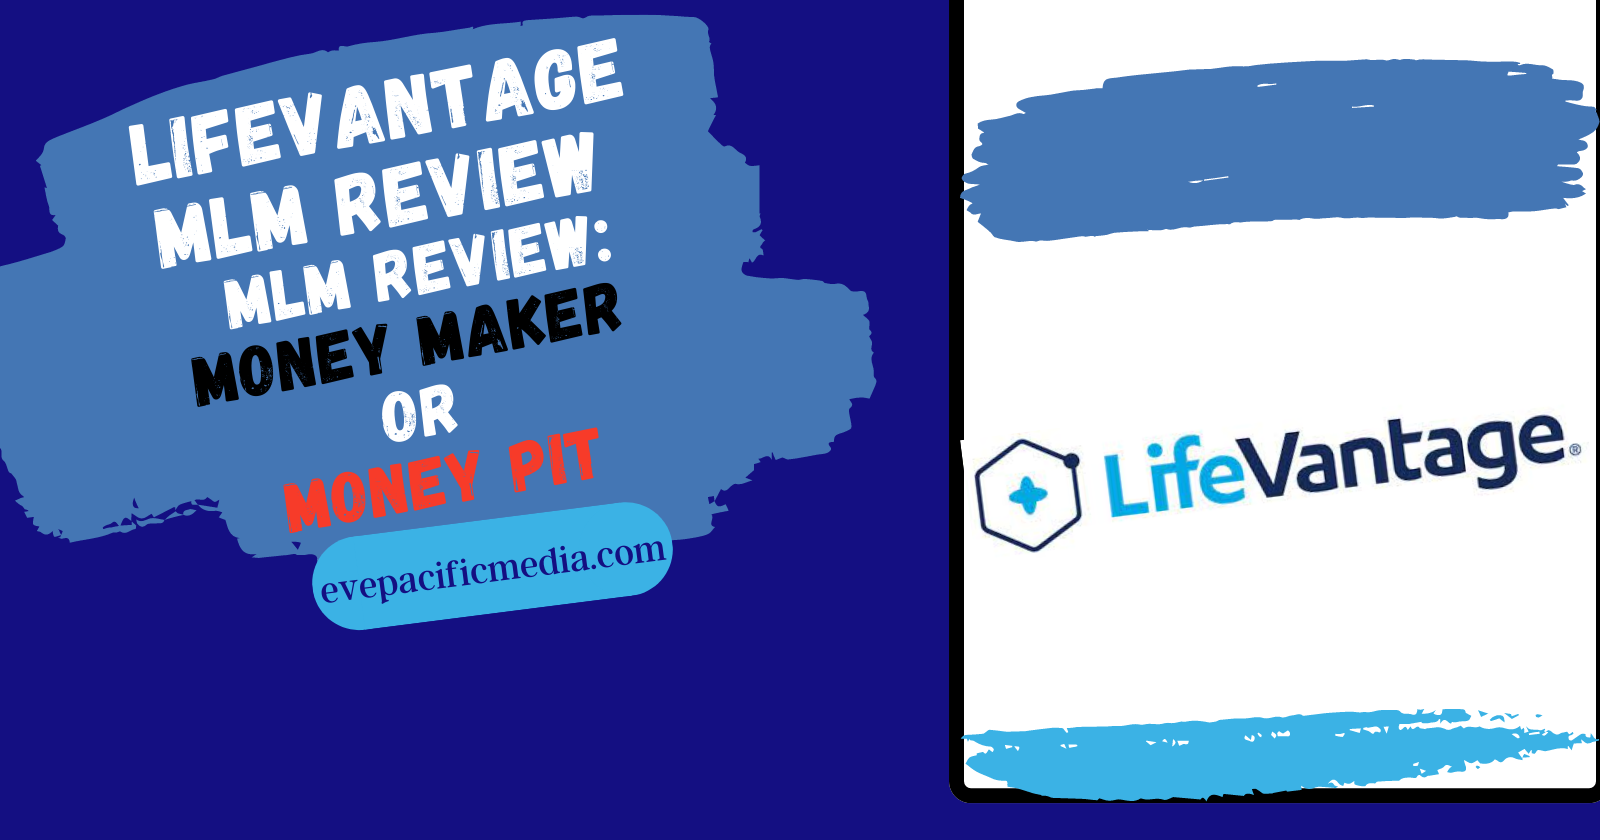 LifeVantage MLM Review: Money Maker or Money Pit?